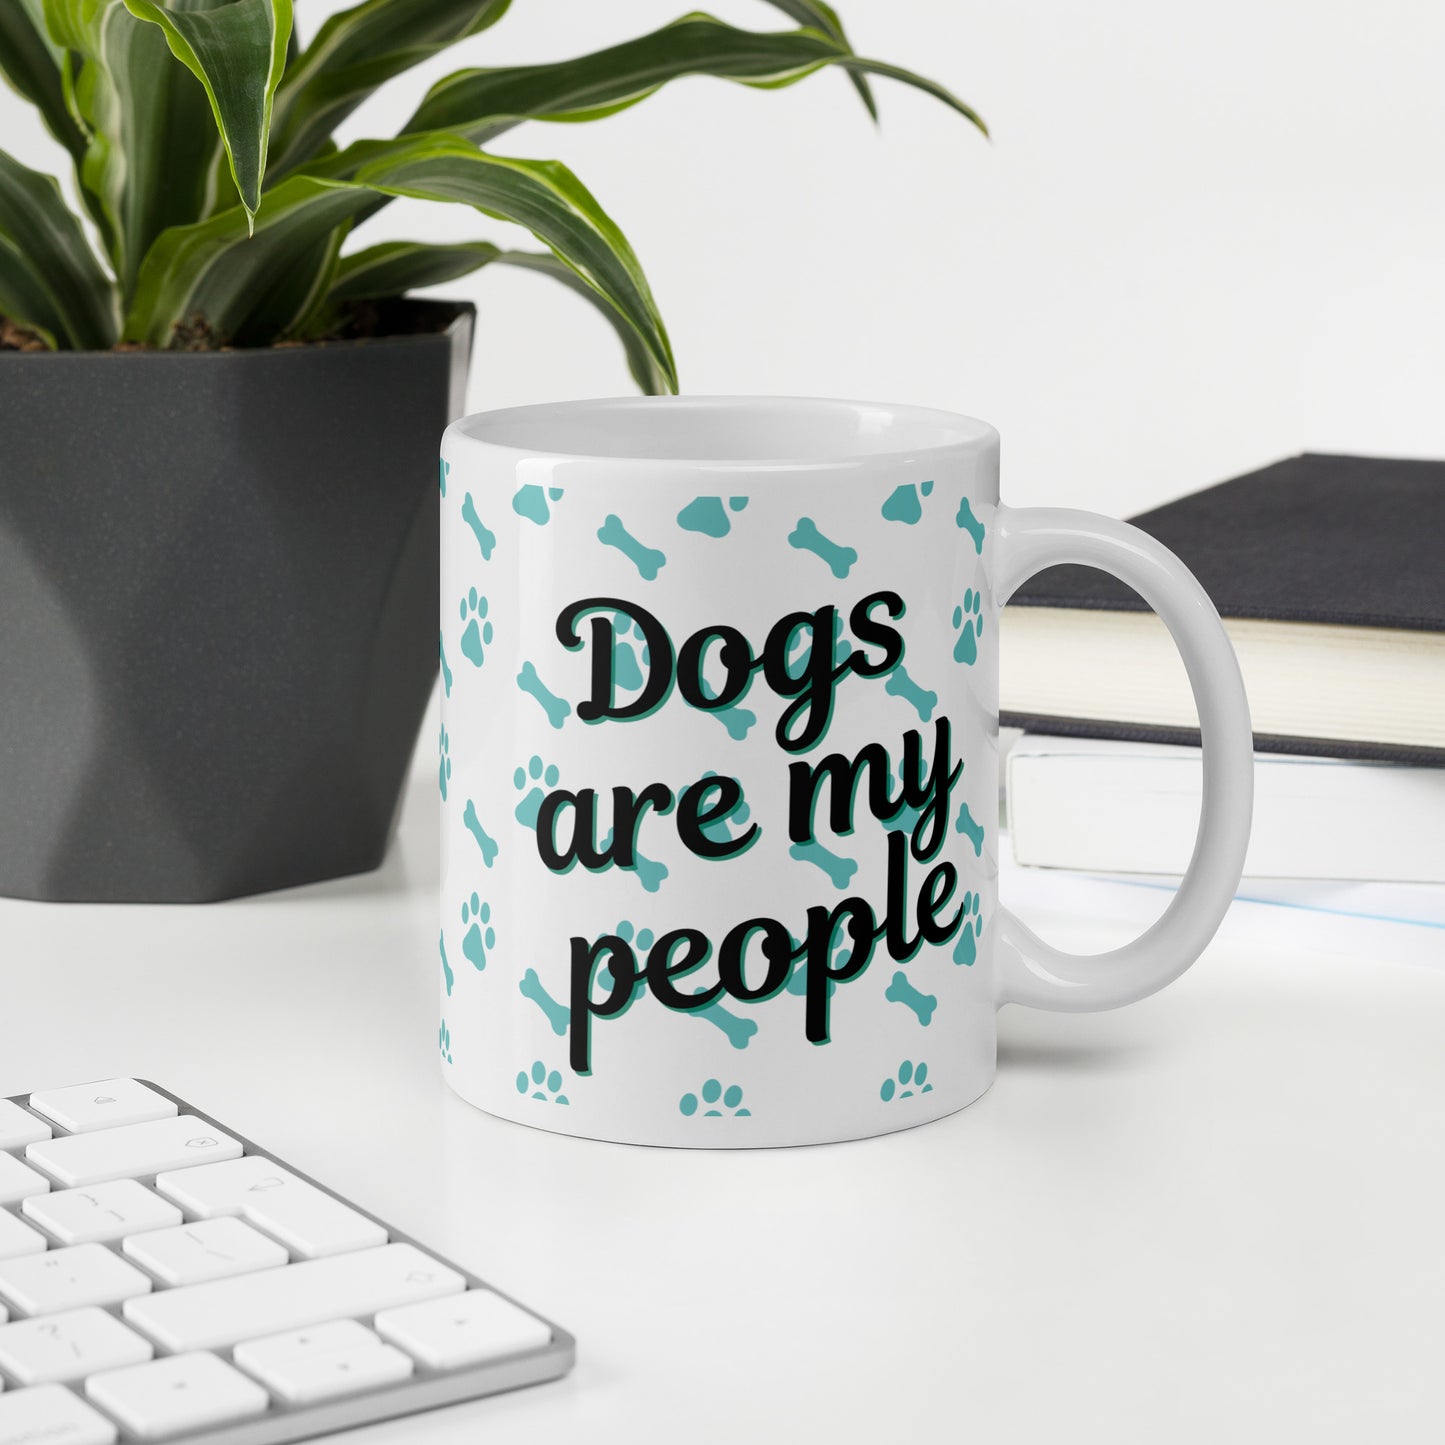 Dogs Are My People - Dog Lovers Mug